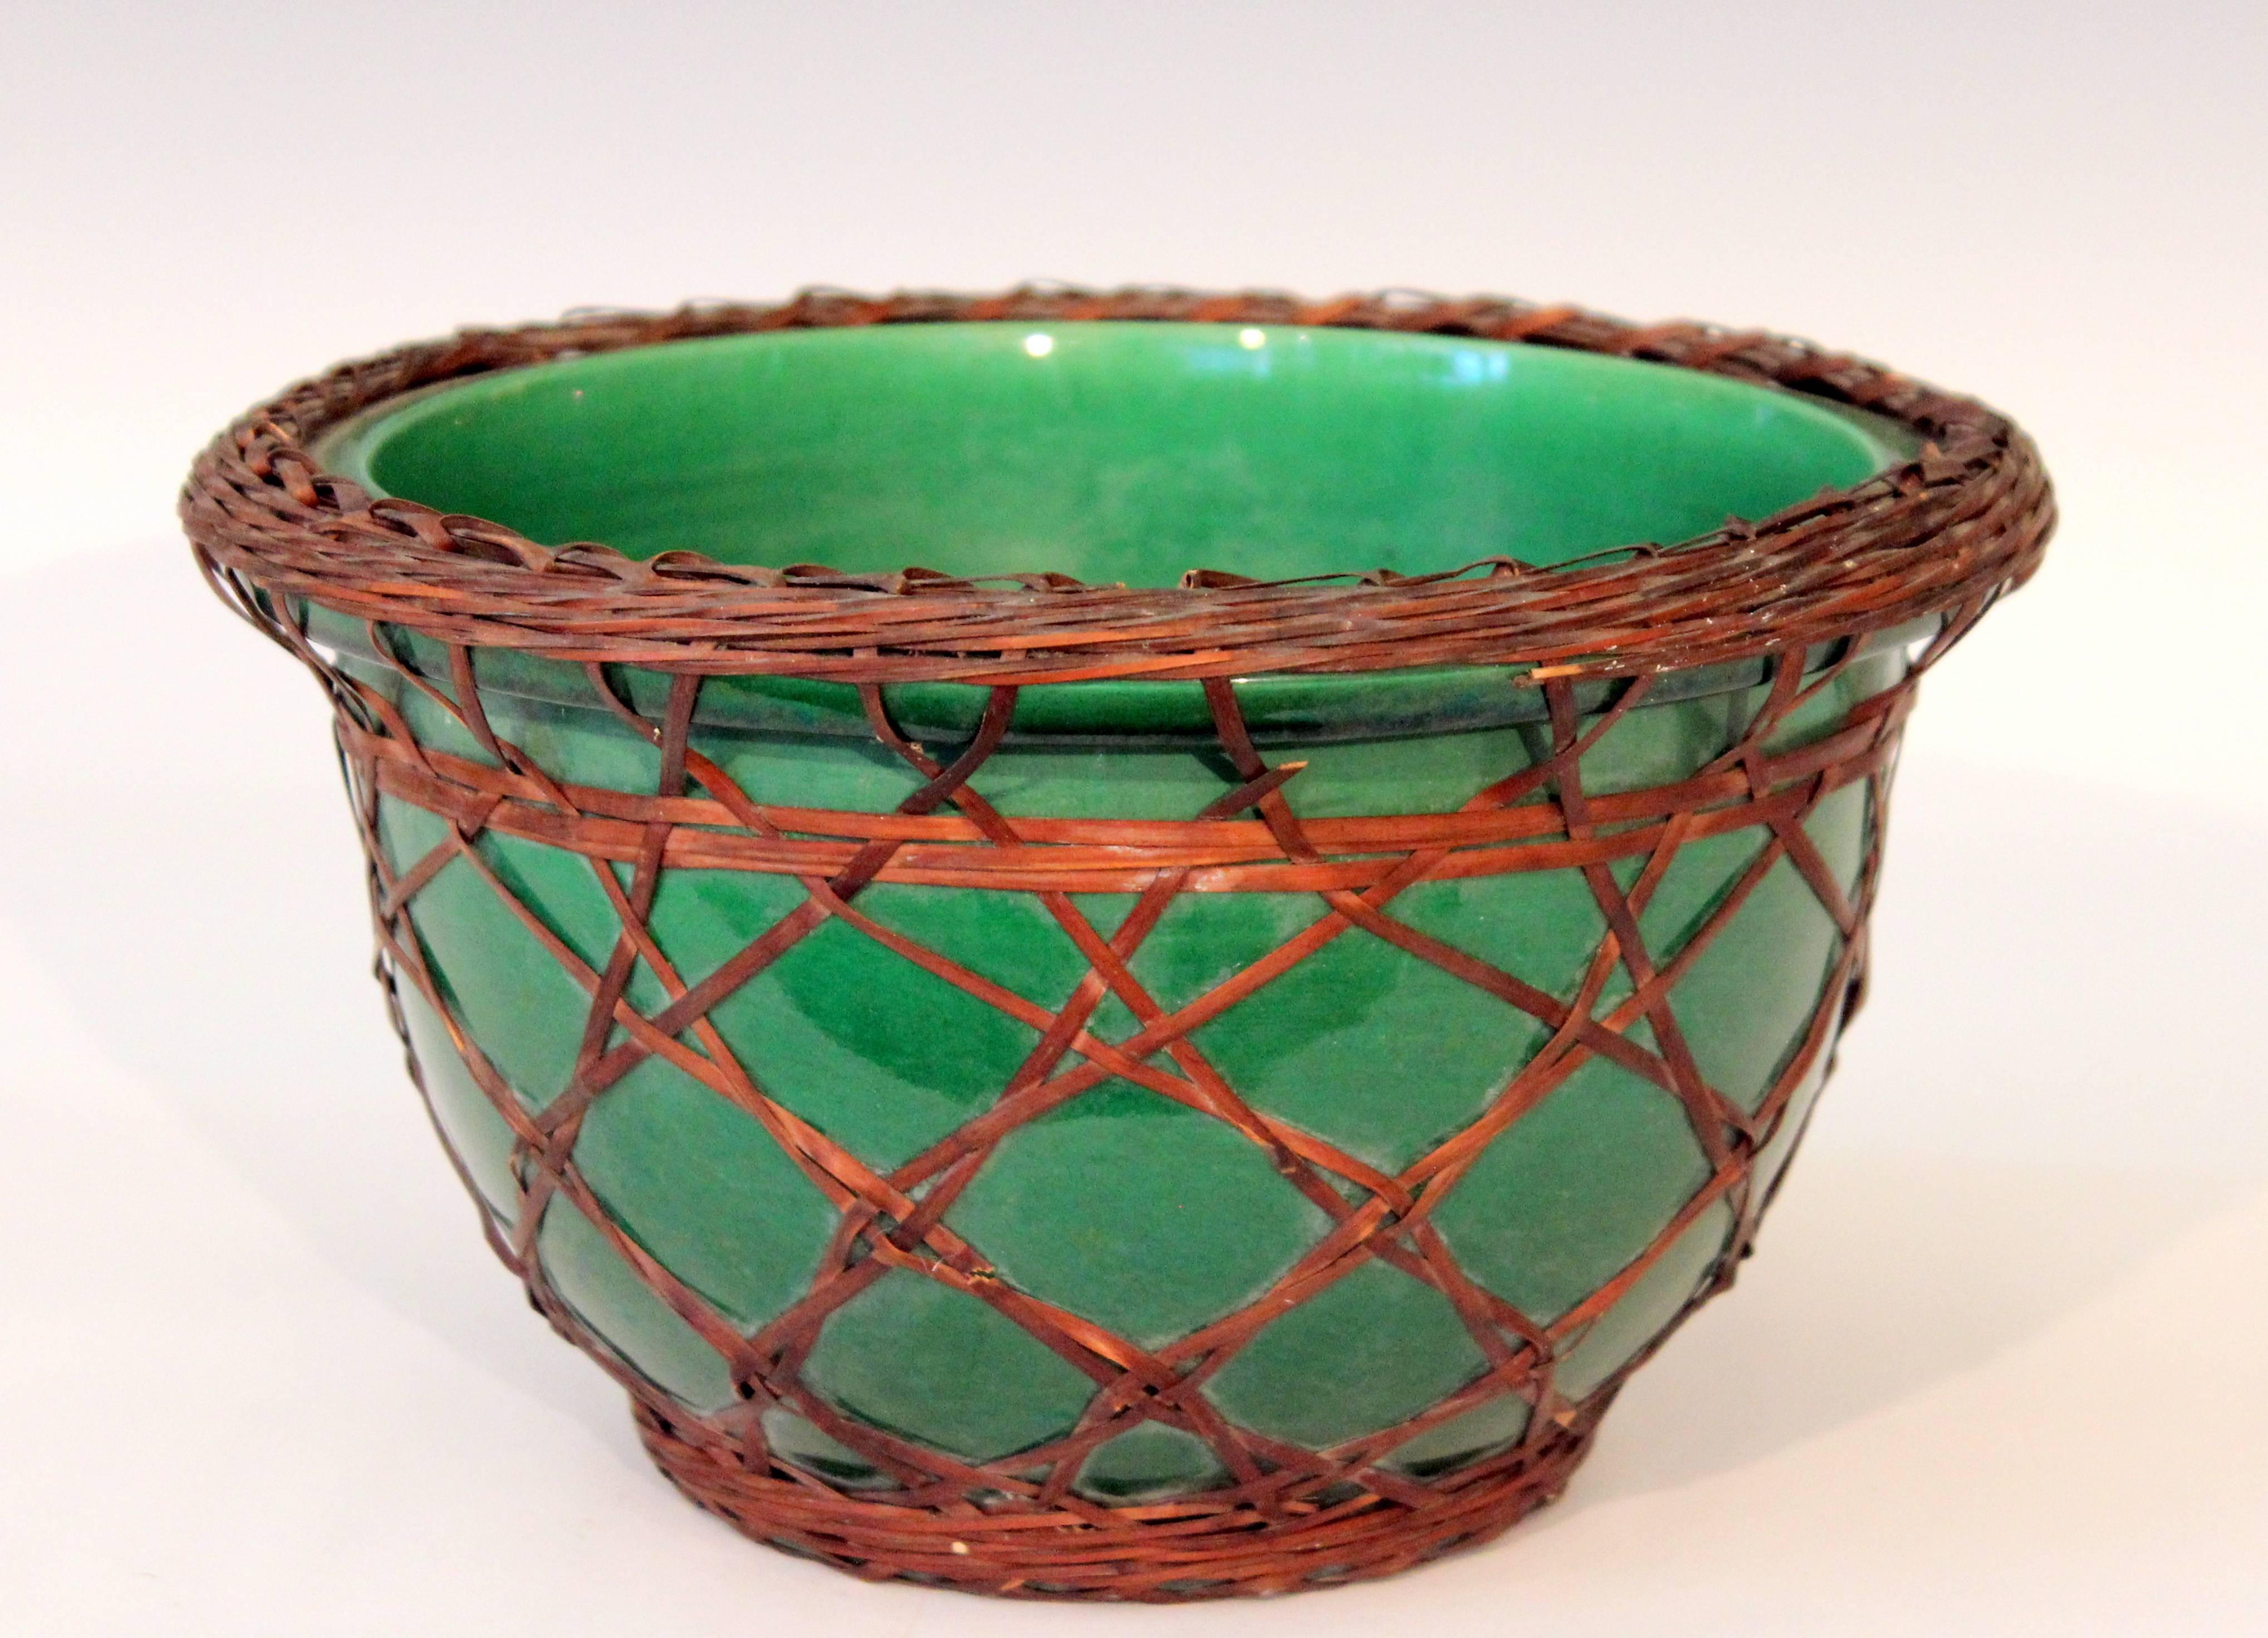 Big Awaji bowl in green monochrome glaze with split bamboo weaving, circa 1910. 6 1/2